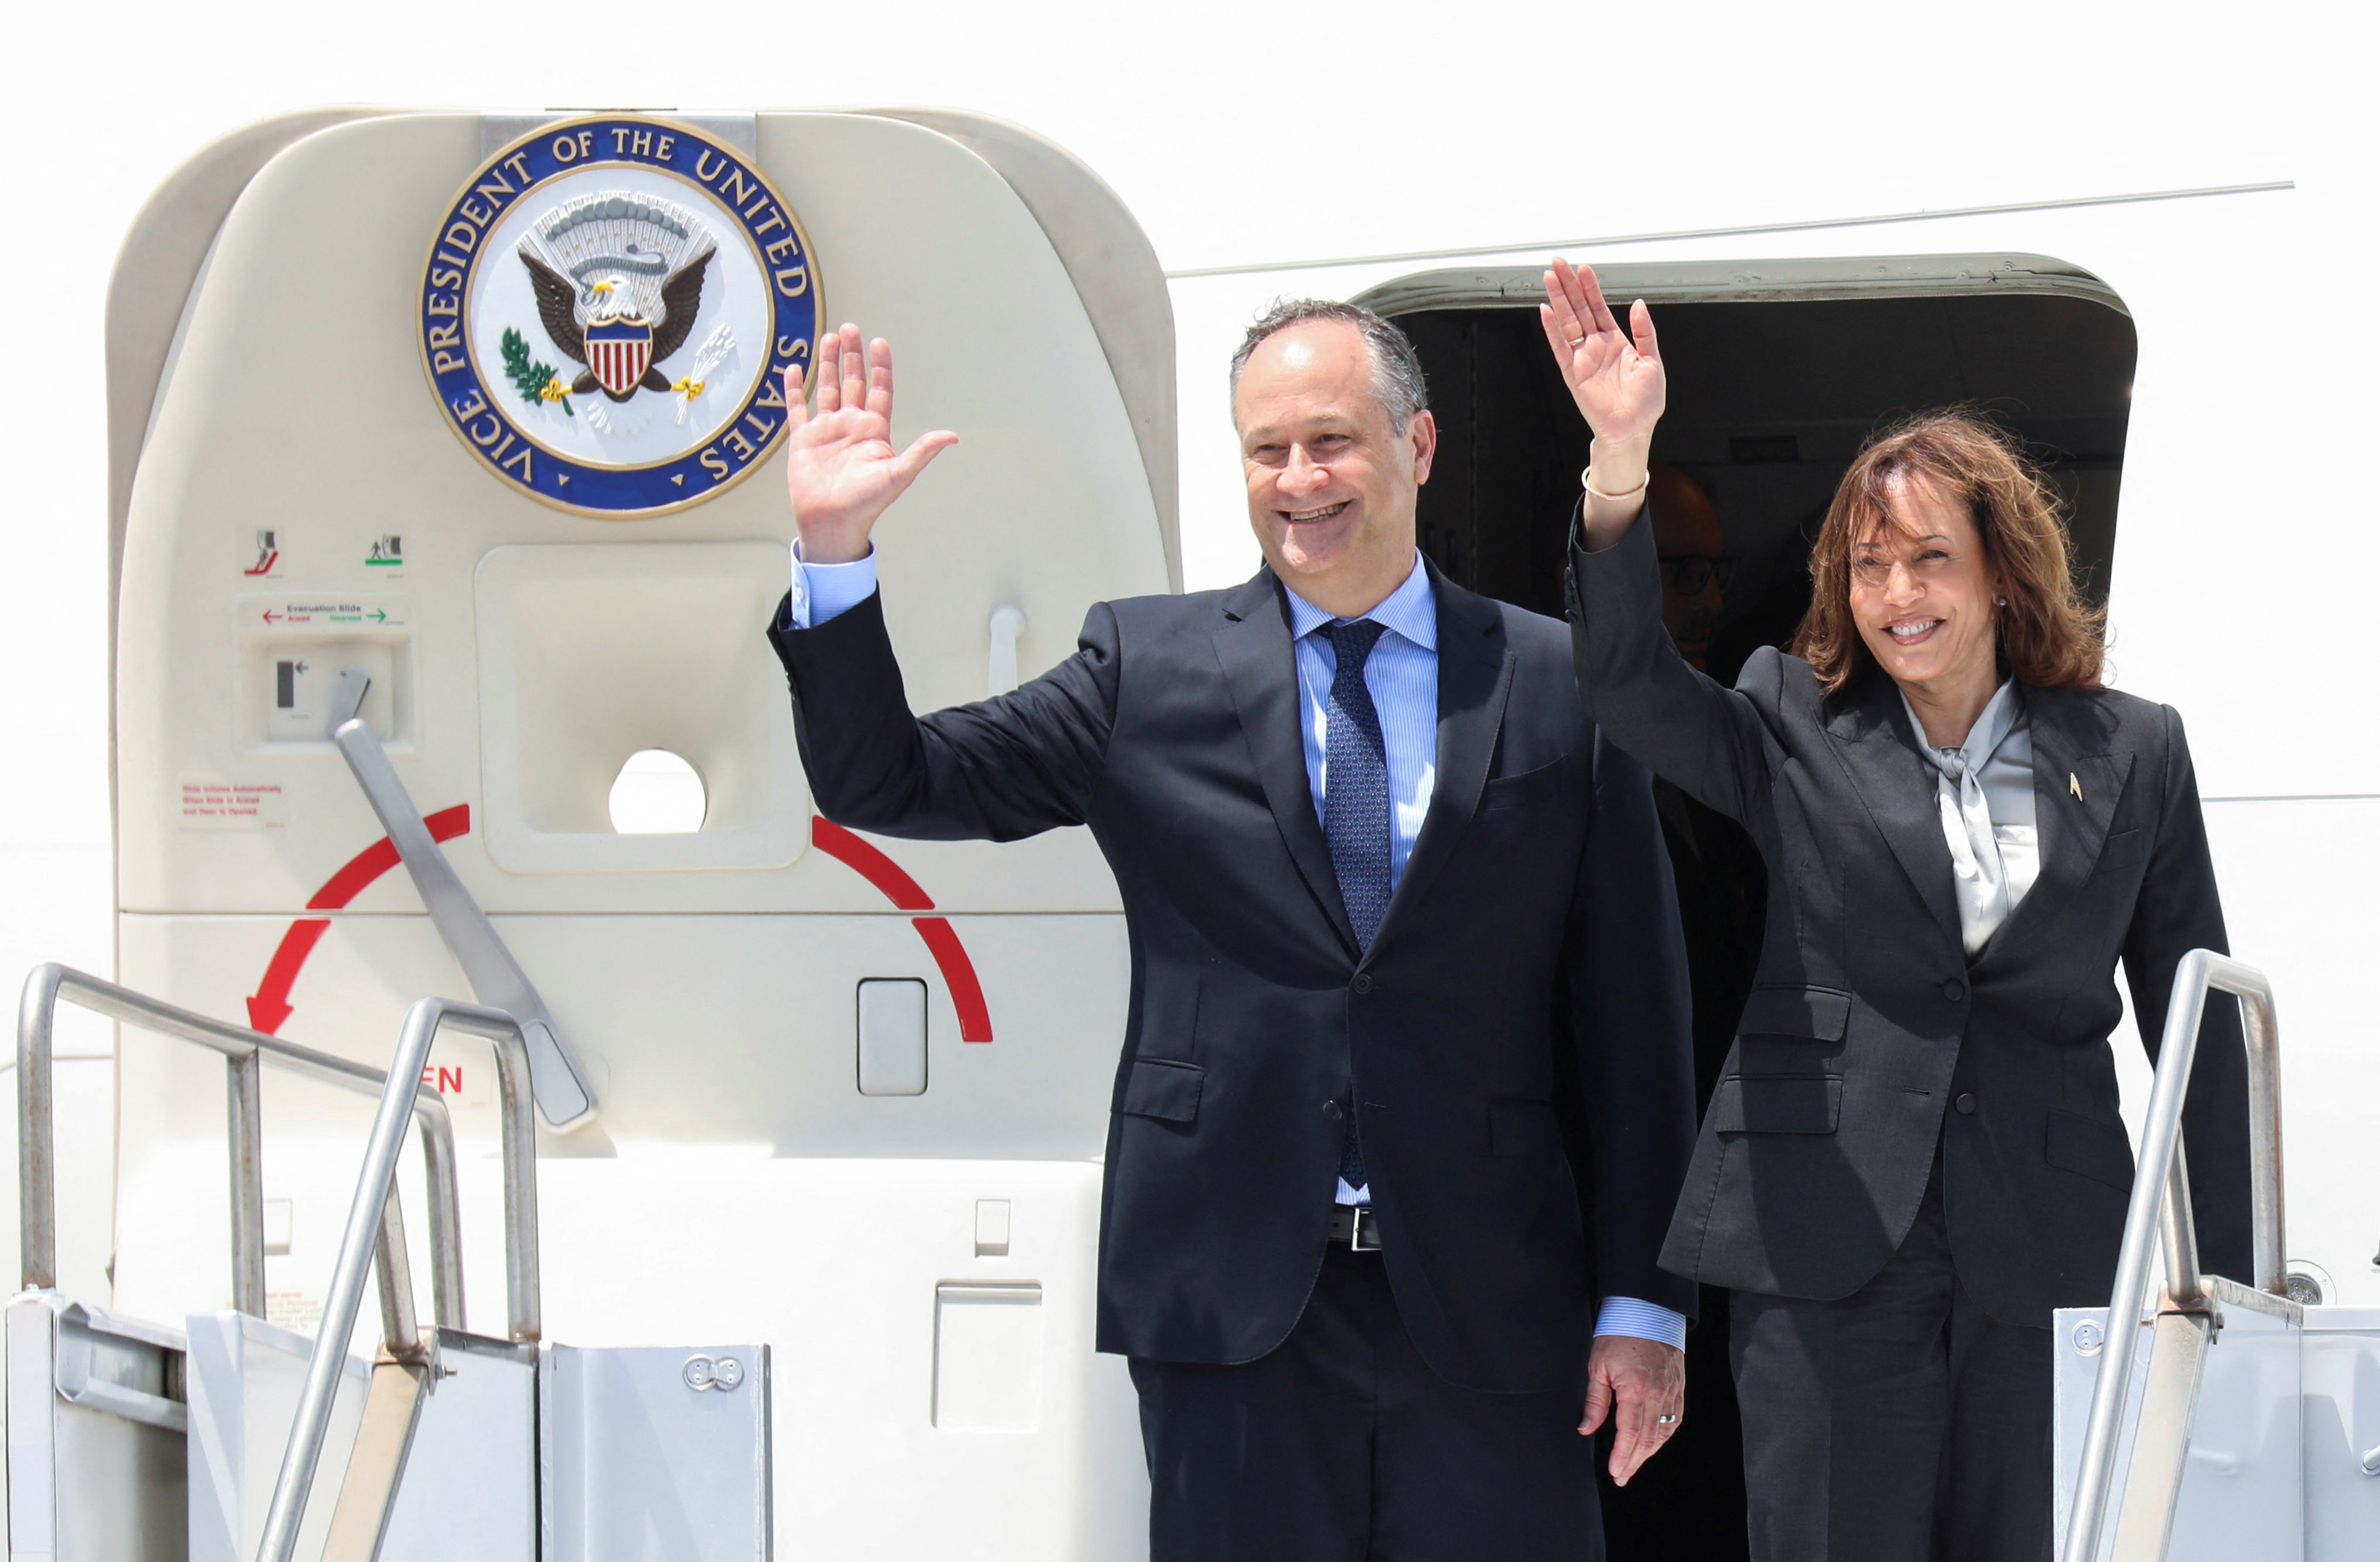 US Vice President Kamala Harris accompanied by Second Gentleman Doug Emhoff, depart Dar es Salaam